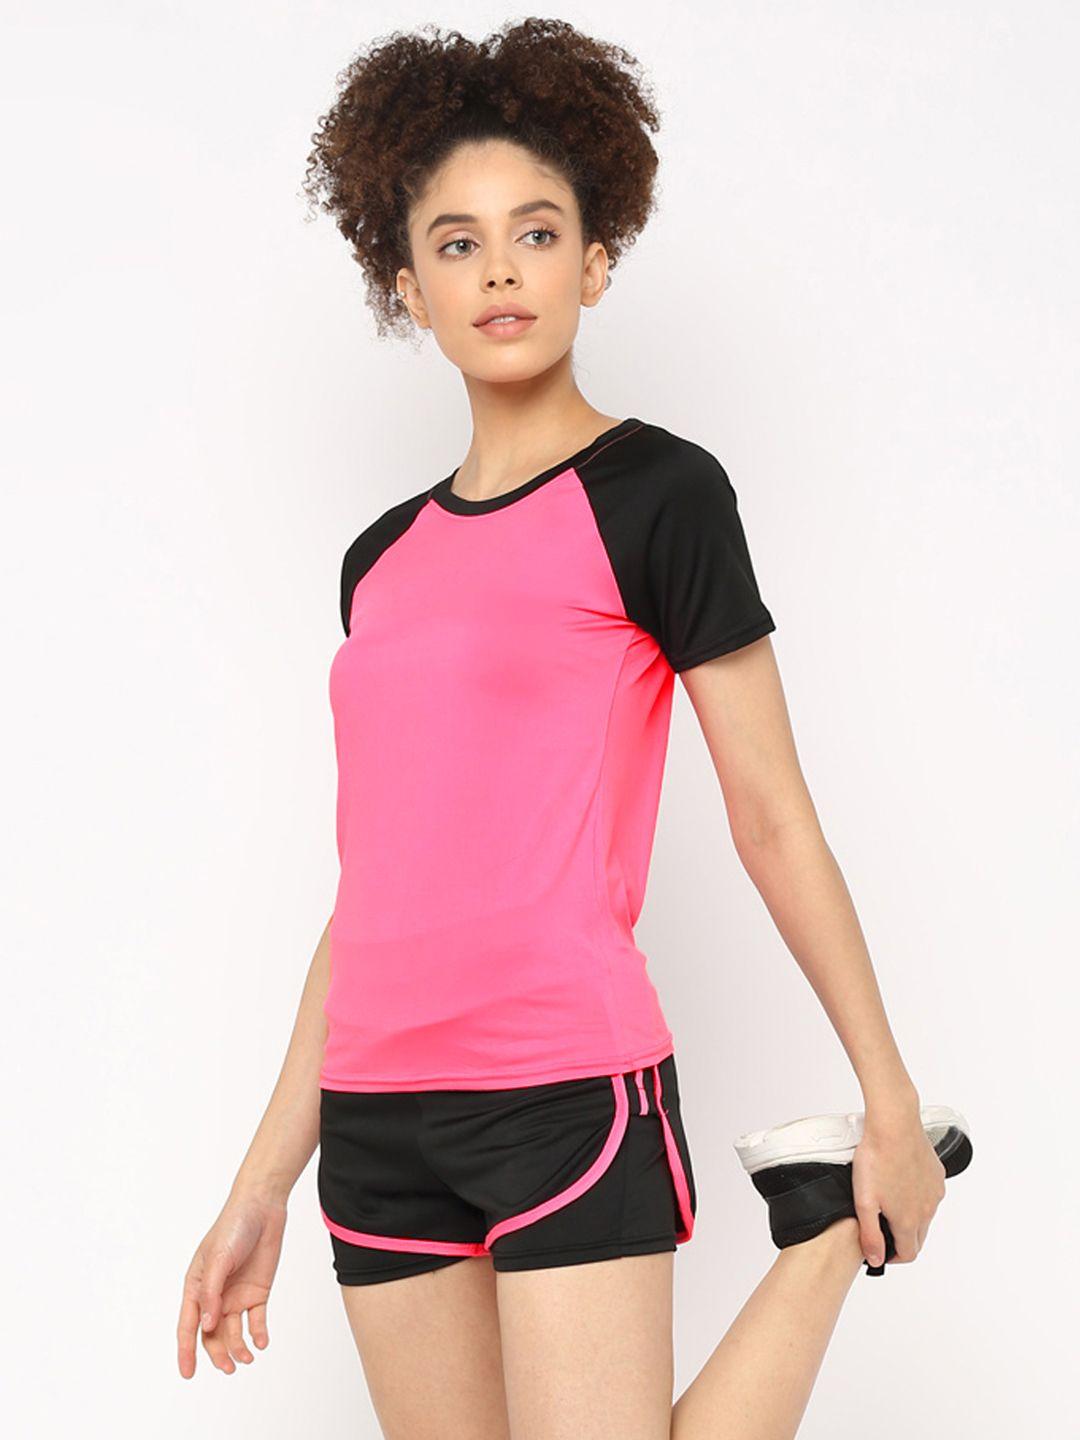 jerfsports women pink & black solid tracksuit